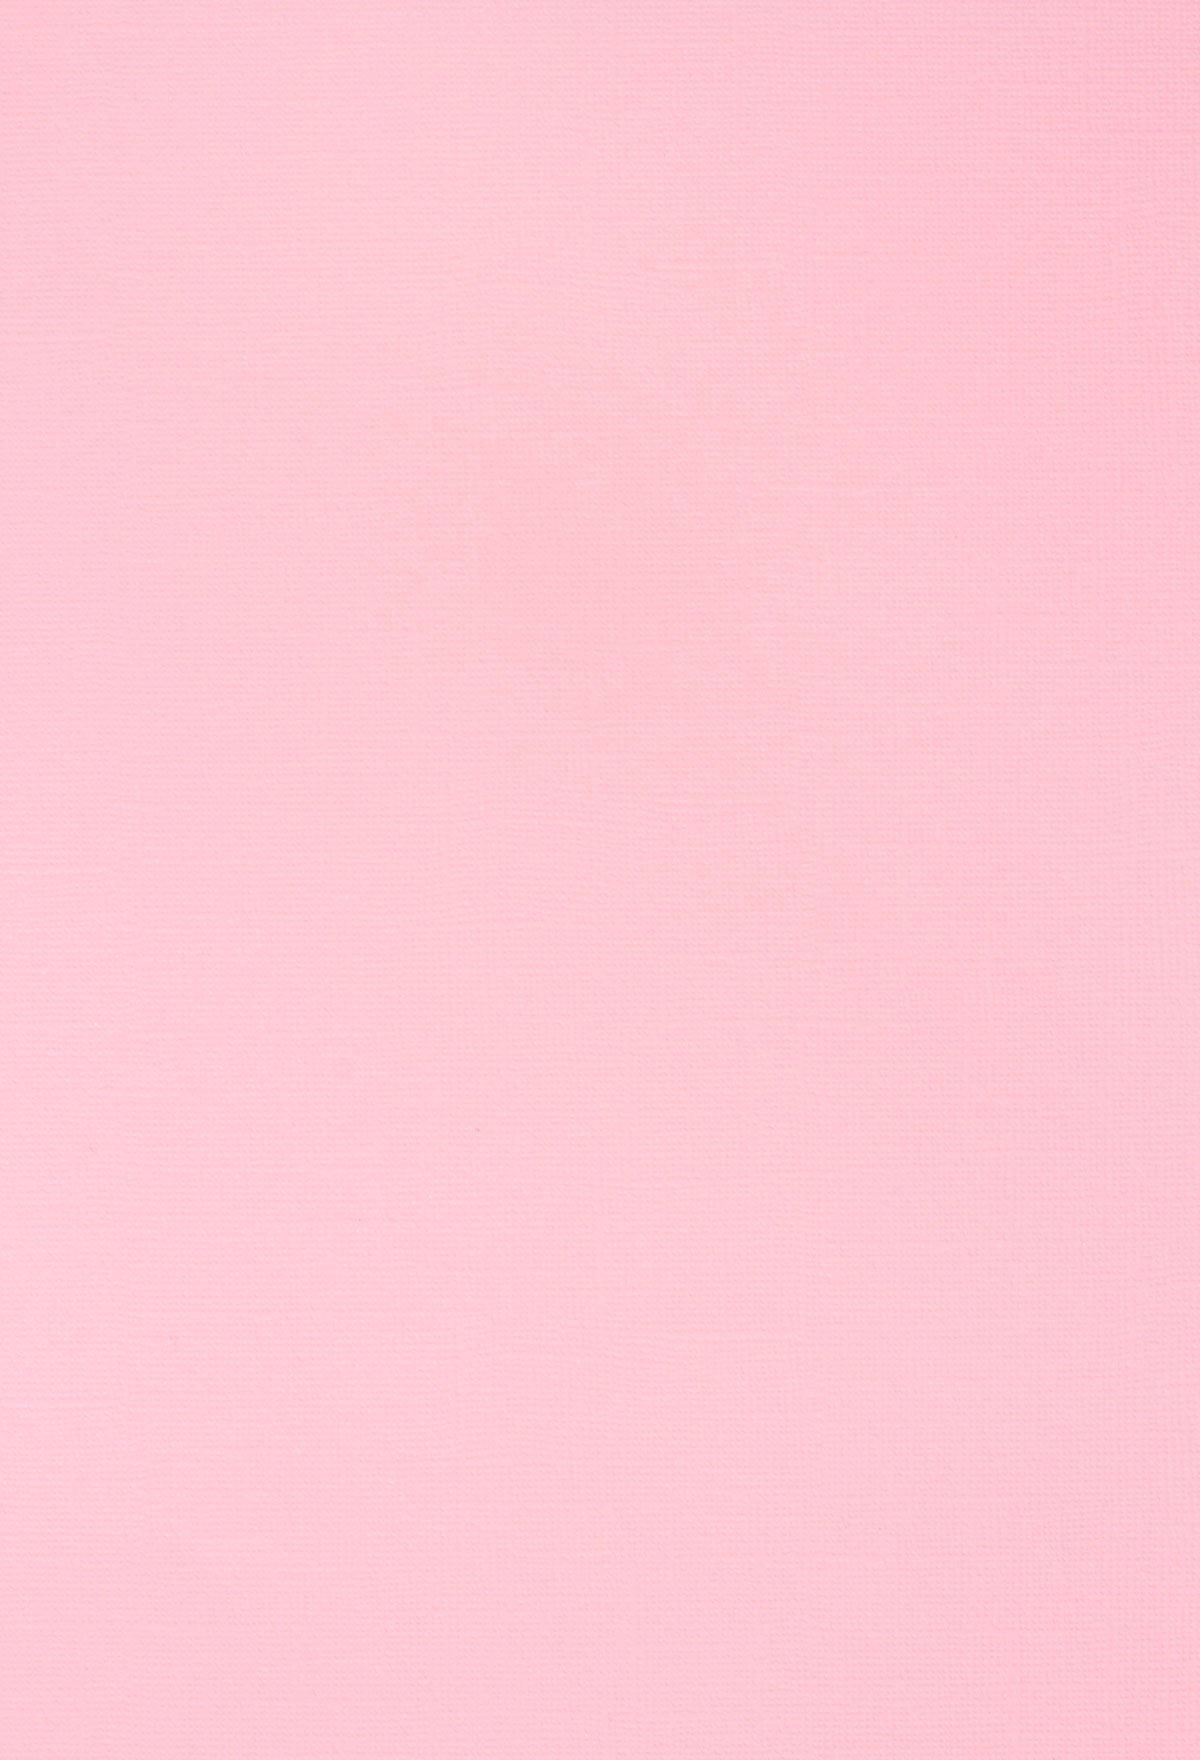 Pink Solid Color Photo Studio Backdrop for Party Portrait